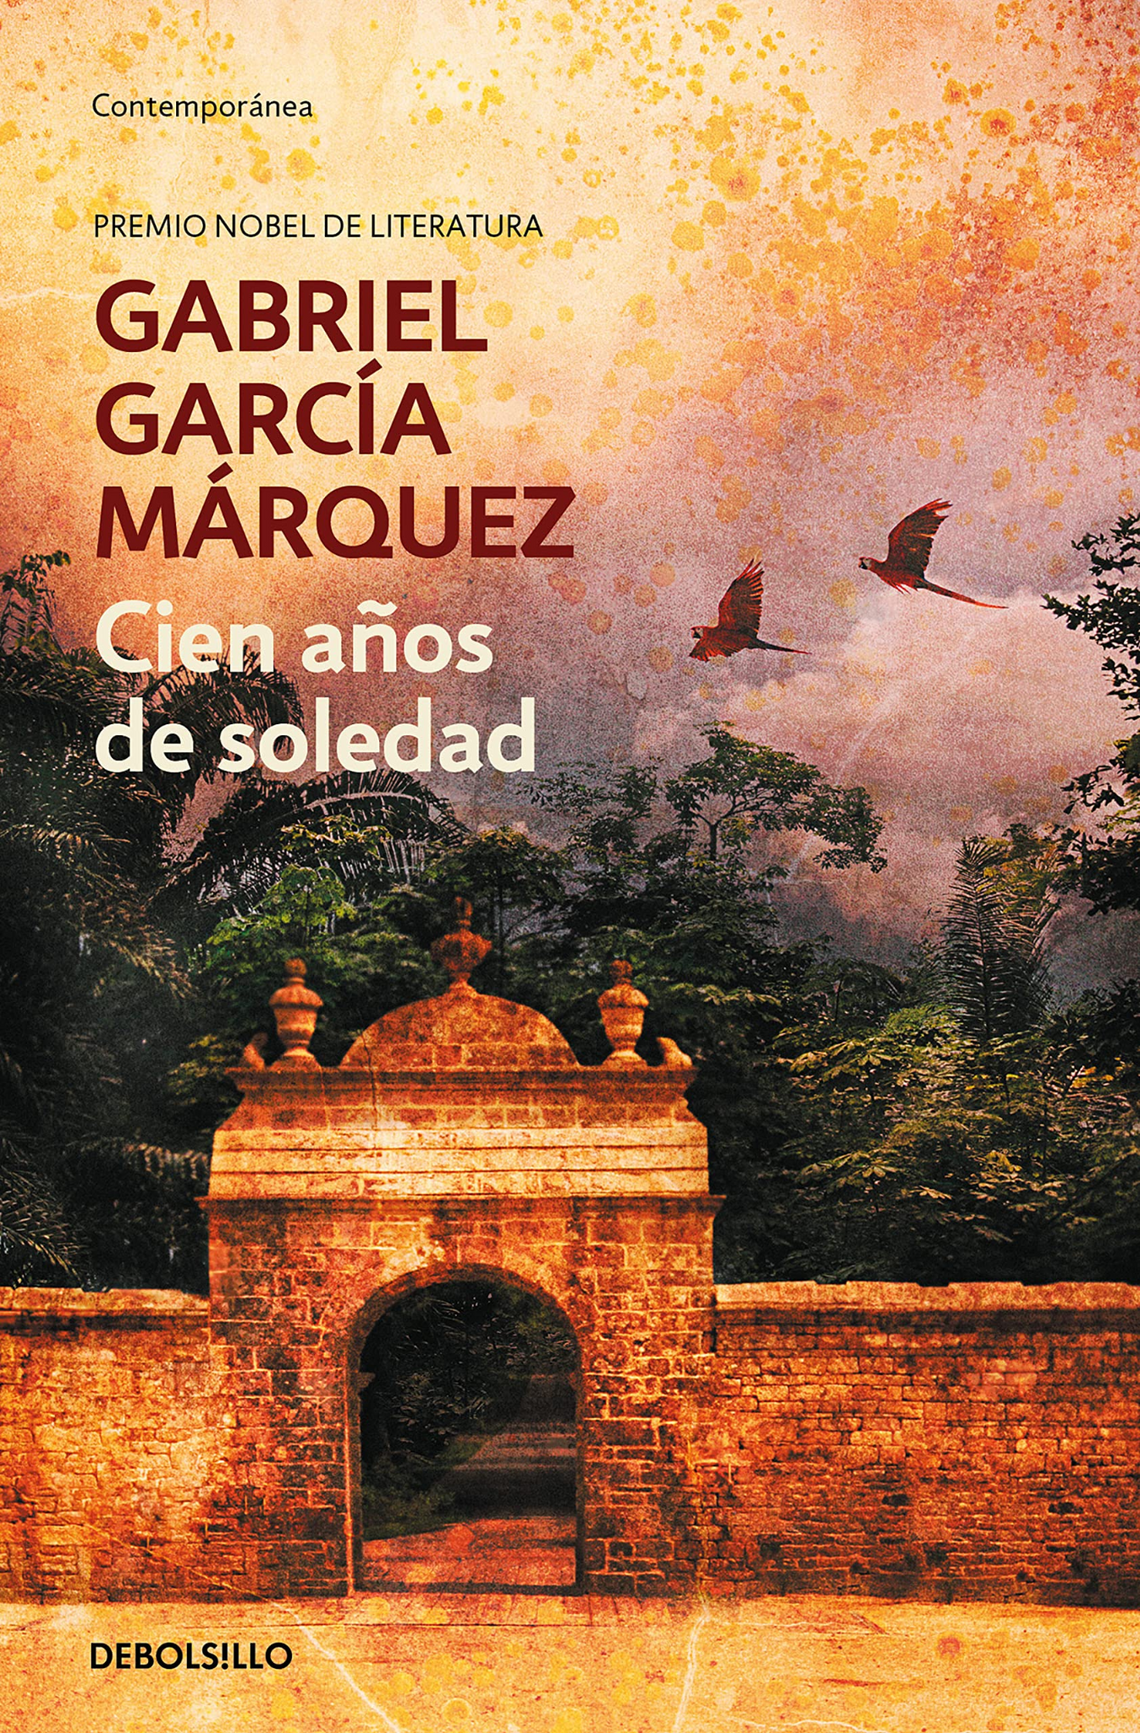 «Сто лет одиночества», Габриэль Гарсиа Маркес
amazon
https://www.amazon.es/soledad-CONTEMPORANEA-Gabriel-Garcia-Marquez/dp/8497592204